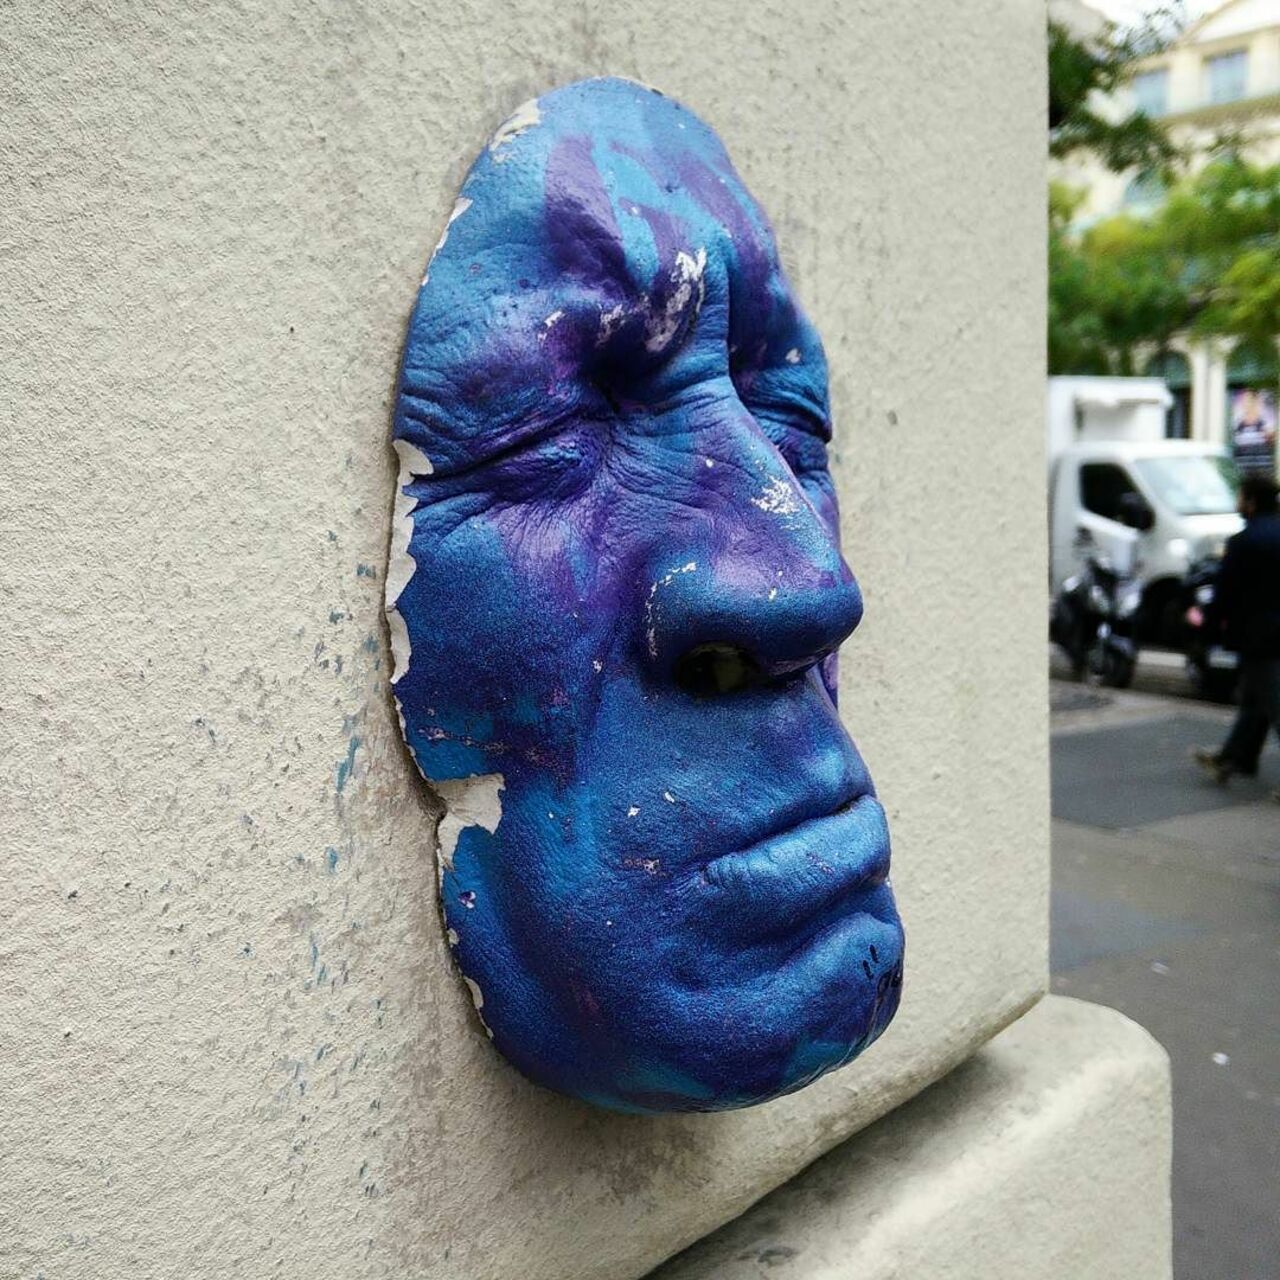 #Paris #graffiti photo by @ceky_art http://ift.tt/1MaG0iI #StreetArt https://t.co/OovSJGZIHT